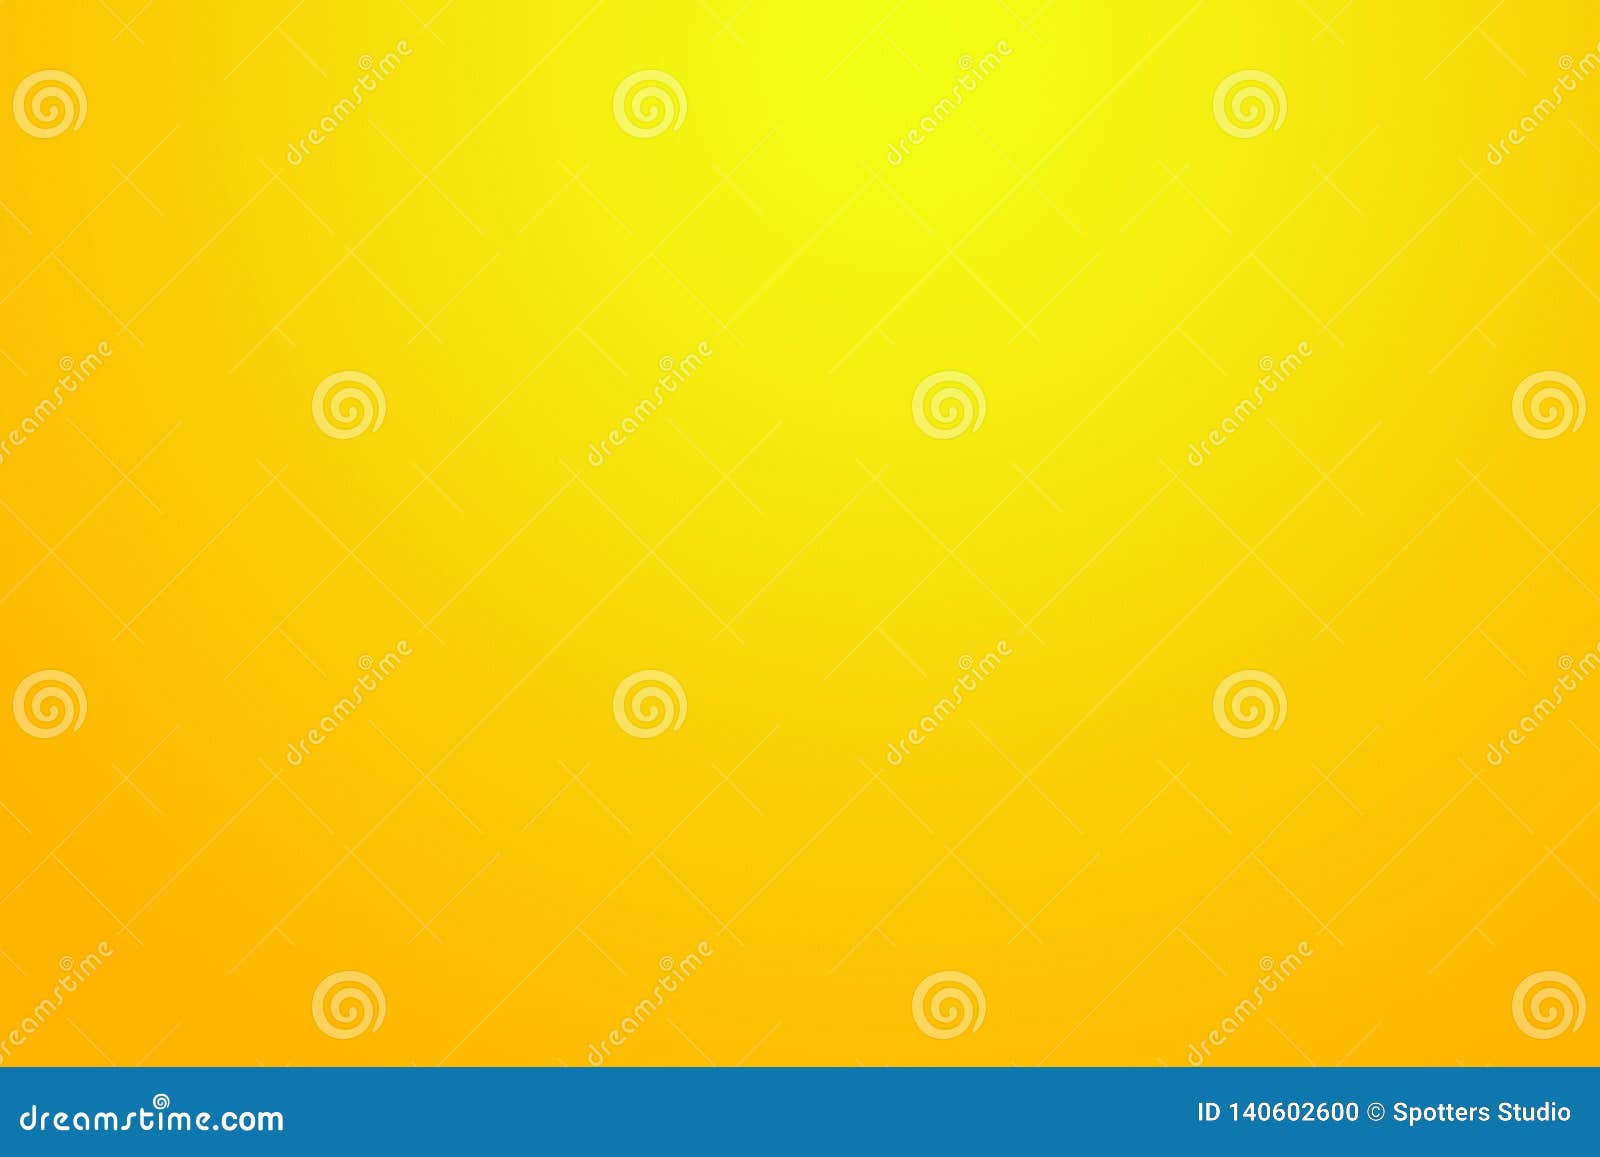 Unduh 48+ Background Kuning Jpg Gratis